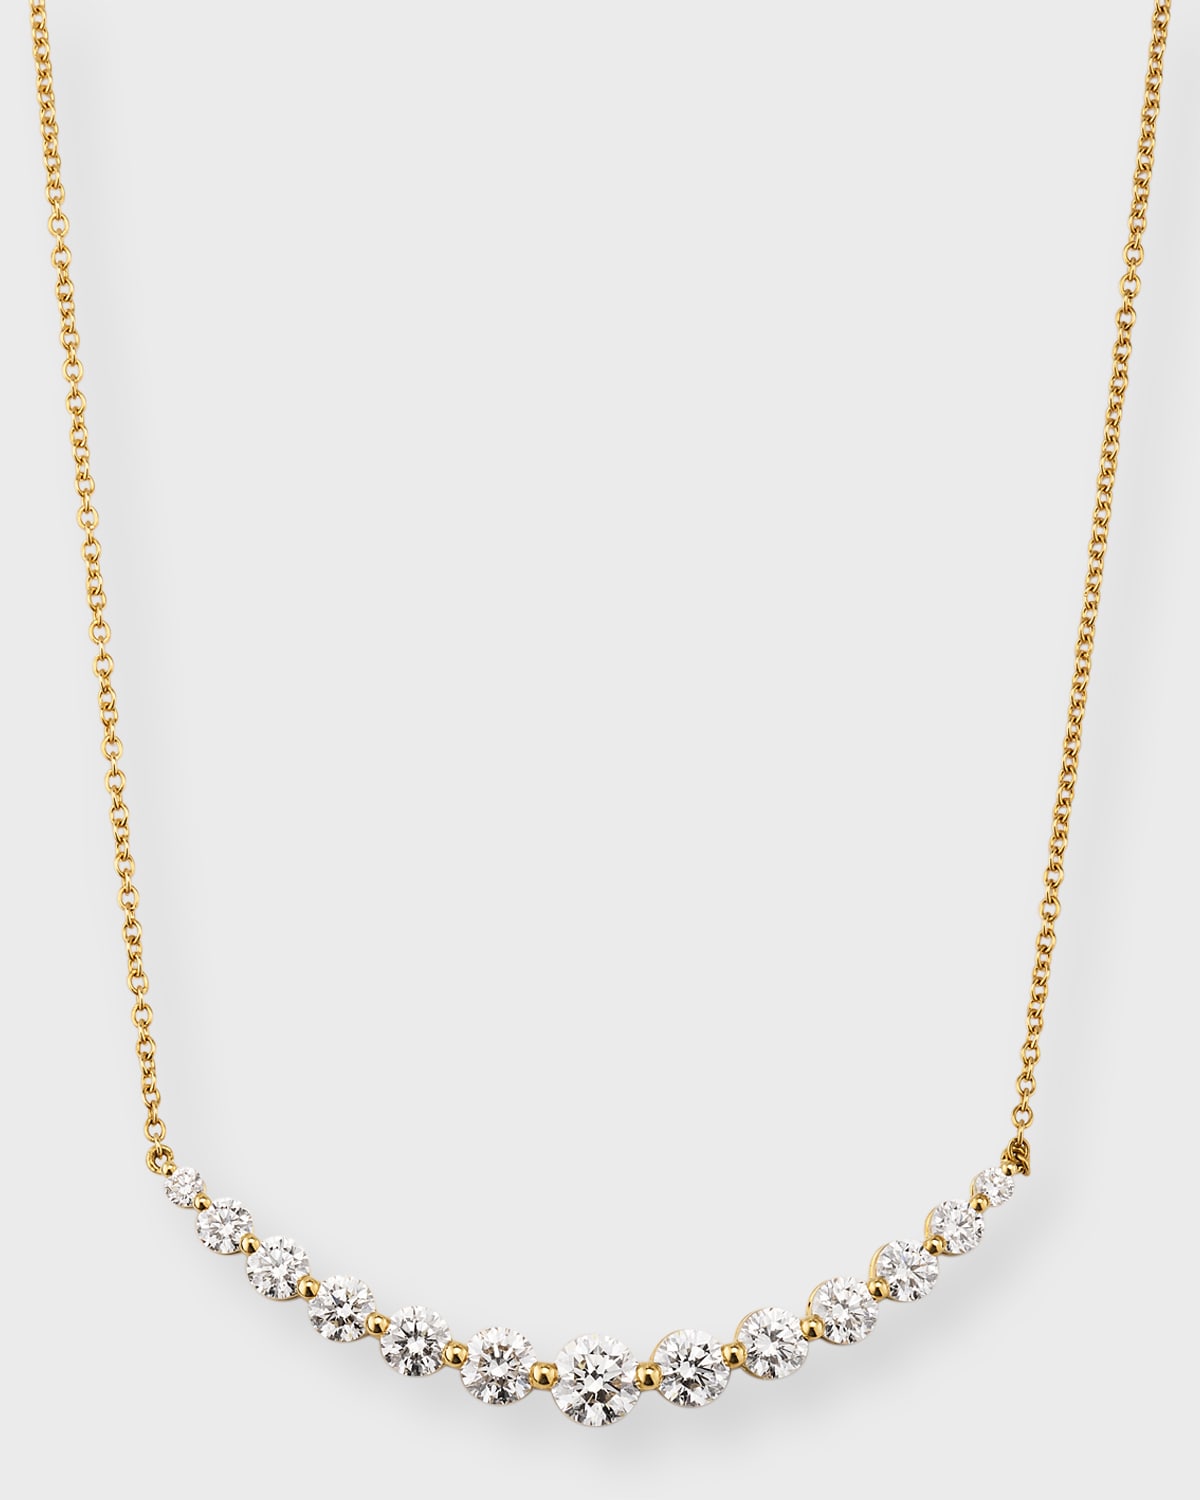 18K Yellow Gold Diamond Smile Necklace, 18"L